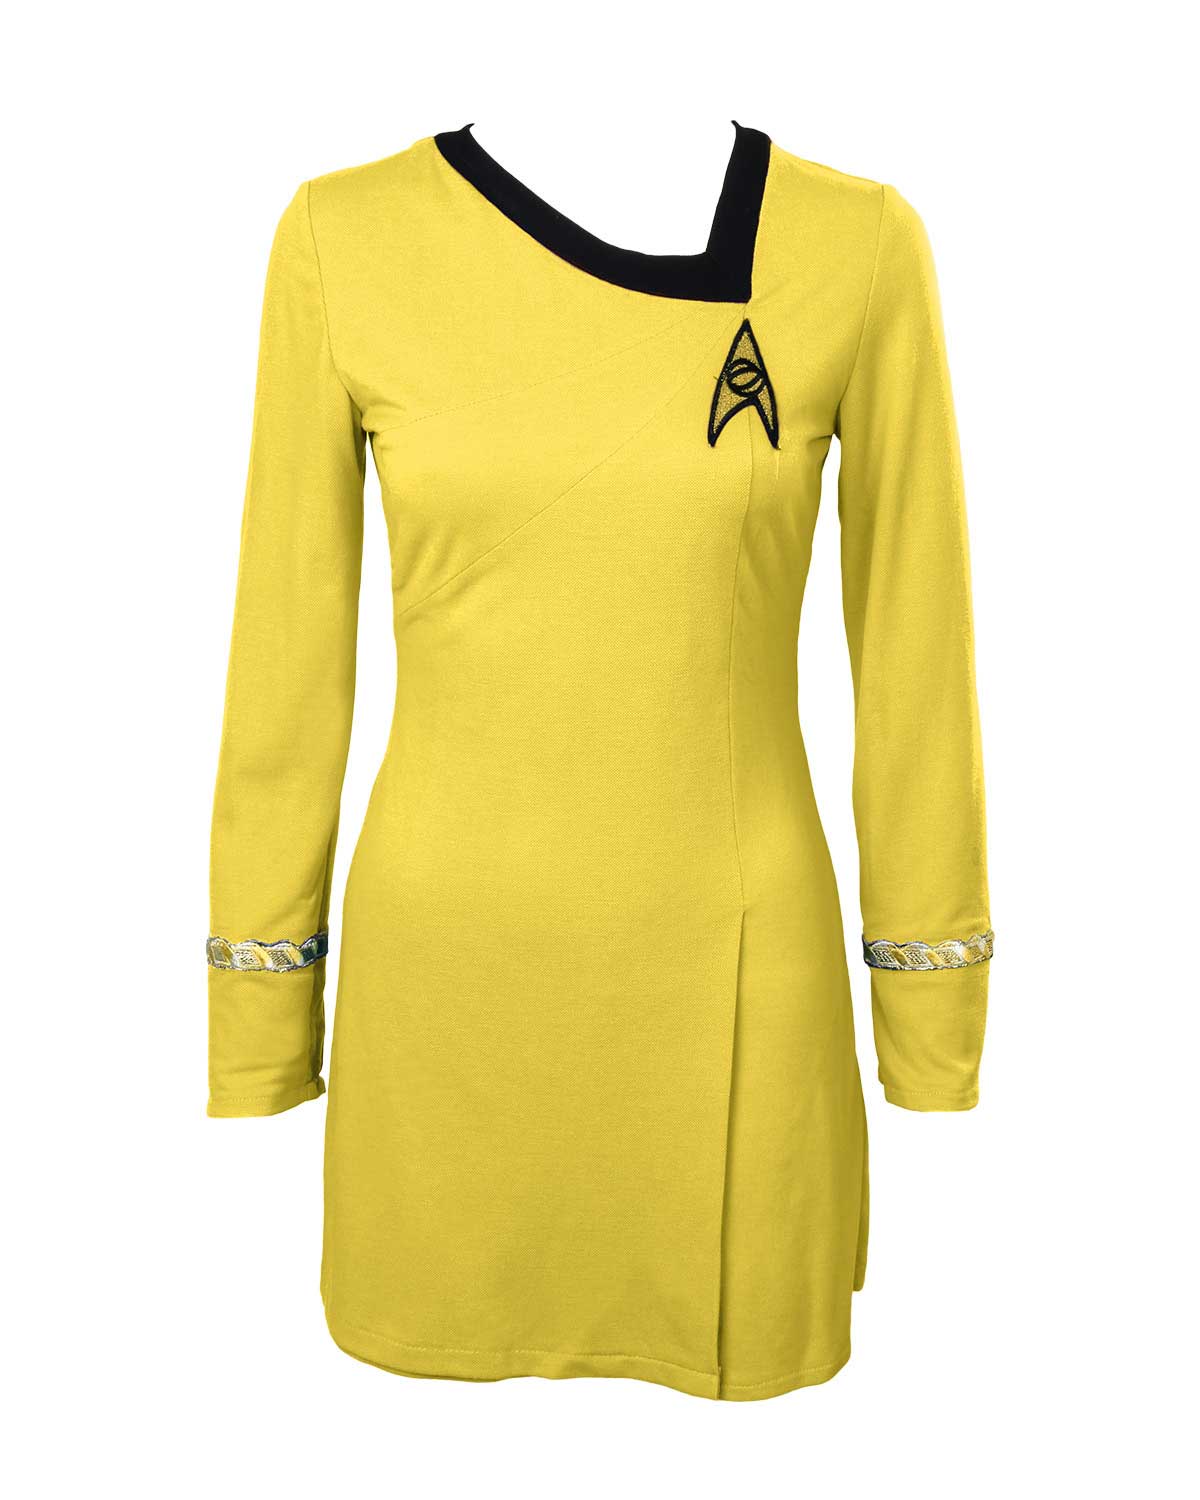 Star Trek The Next Generation Duty Blue Yellow Red Dress